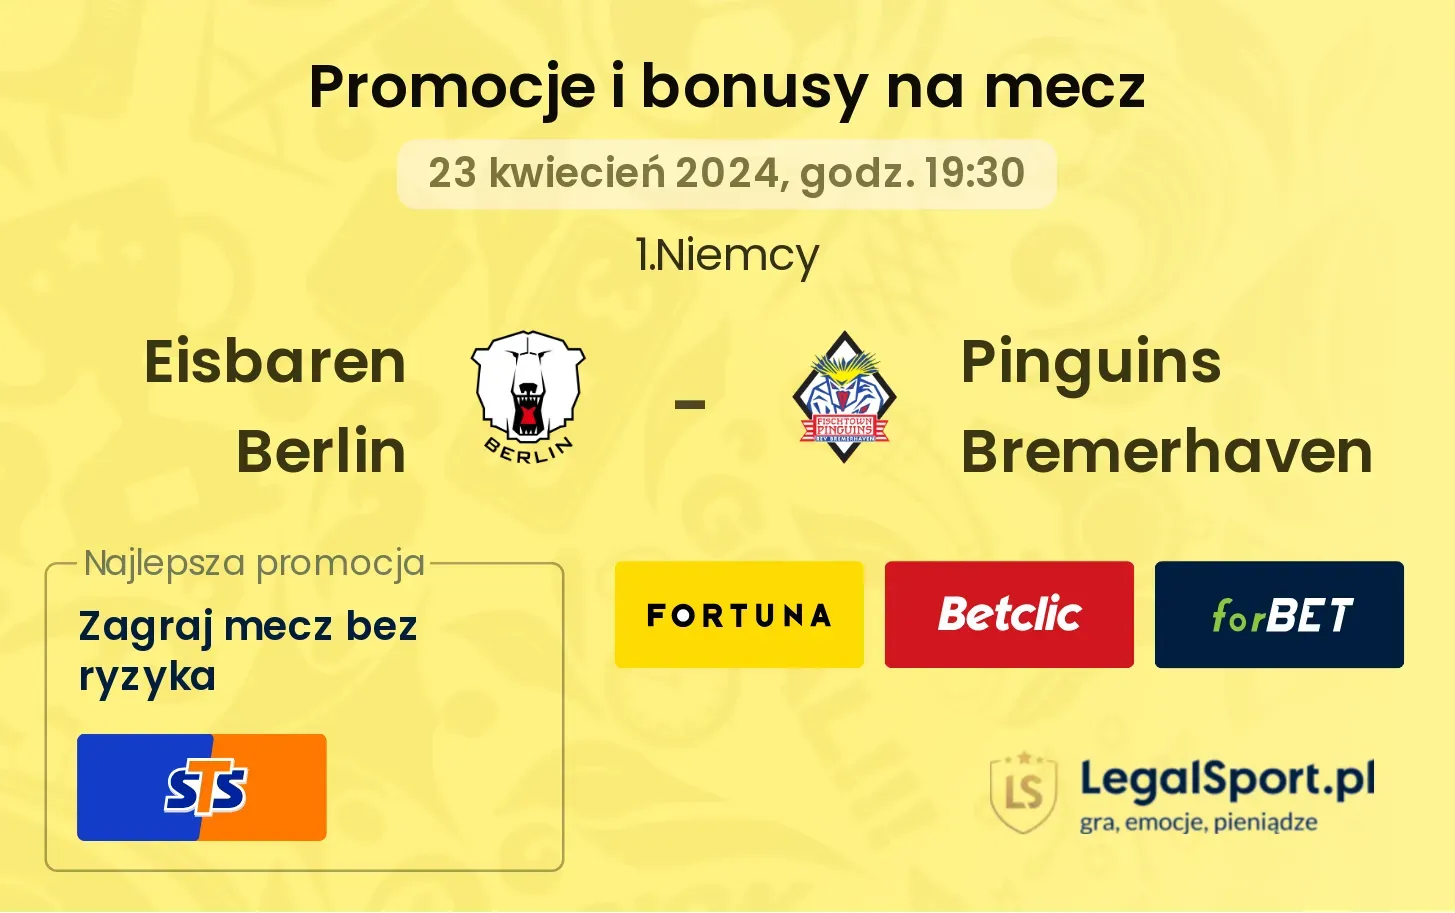  Eisbaren Berlin - Pinguins Bremerhaven promocje i bonusy (23.04, 19:30)